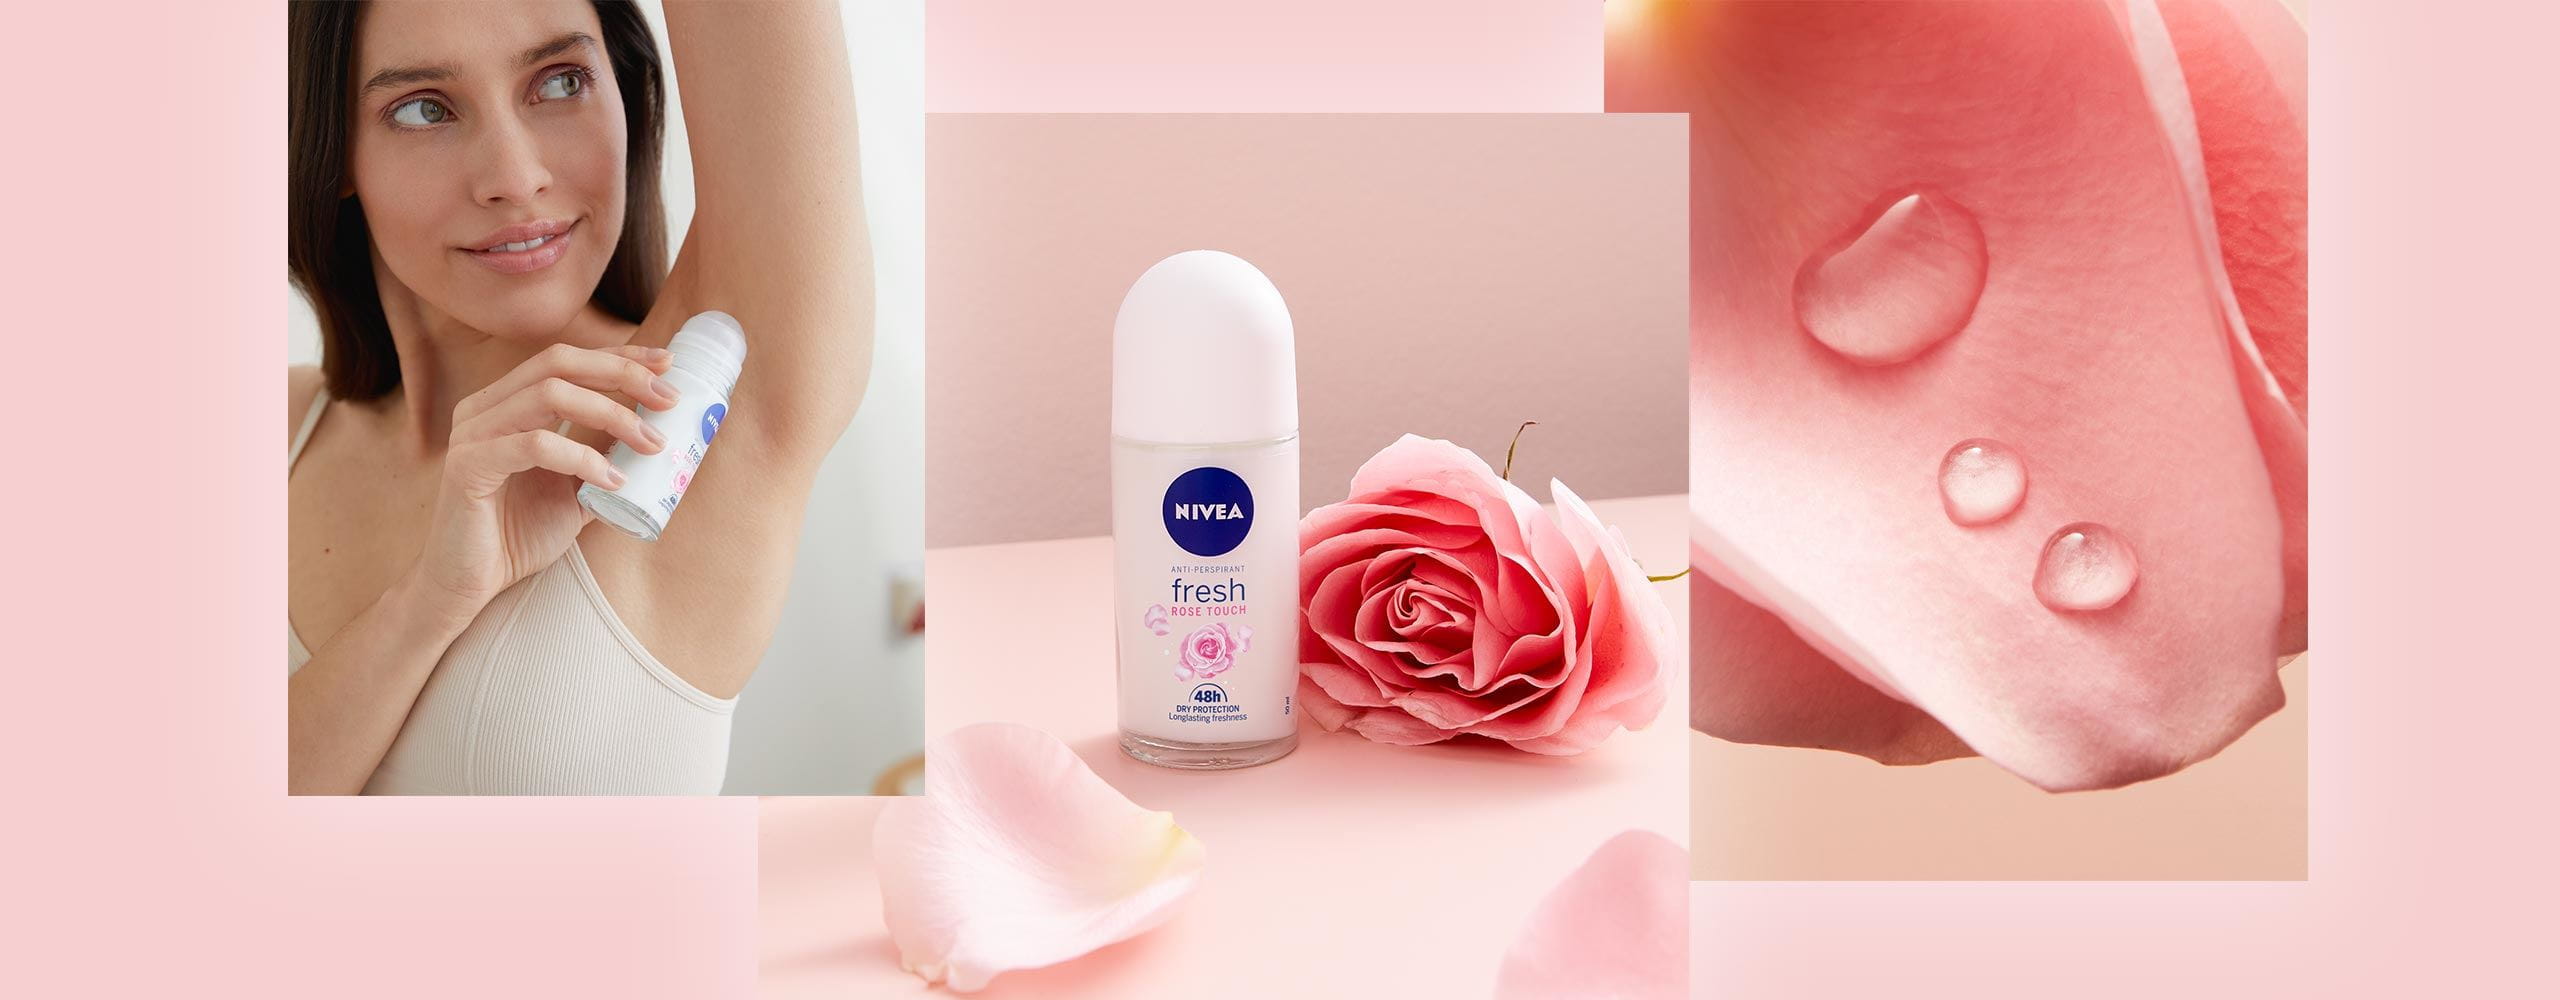 NIVEA Deo Fresh Rose Touch- Produkttest